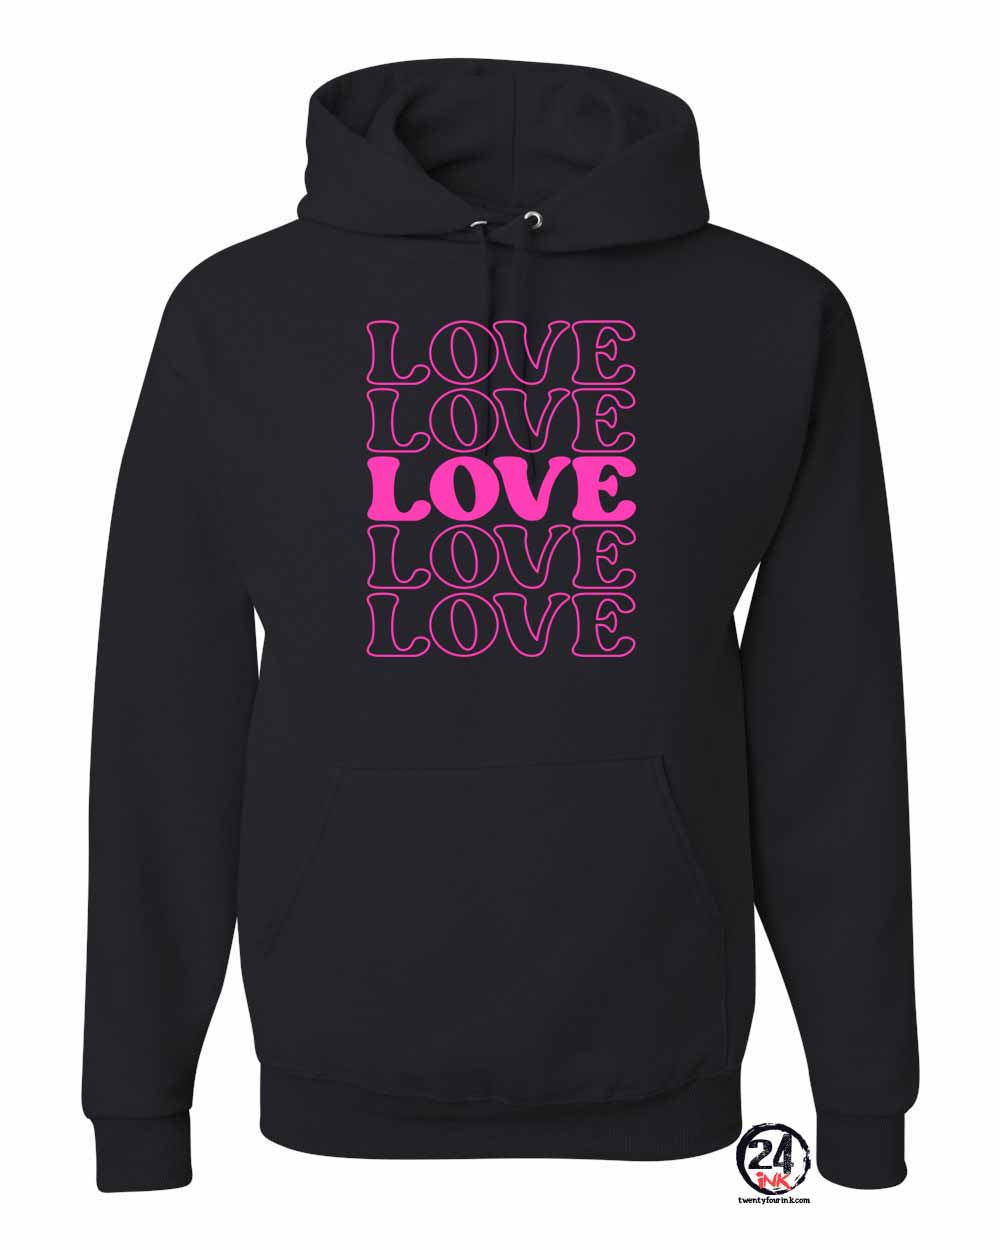 Love, Love, Love Hooded Sweatshirt